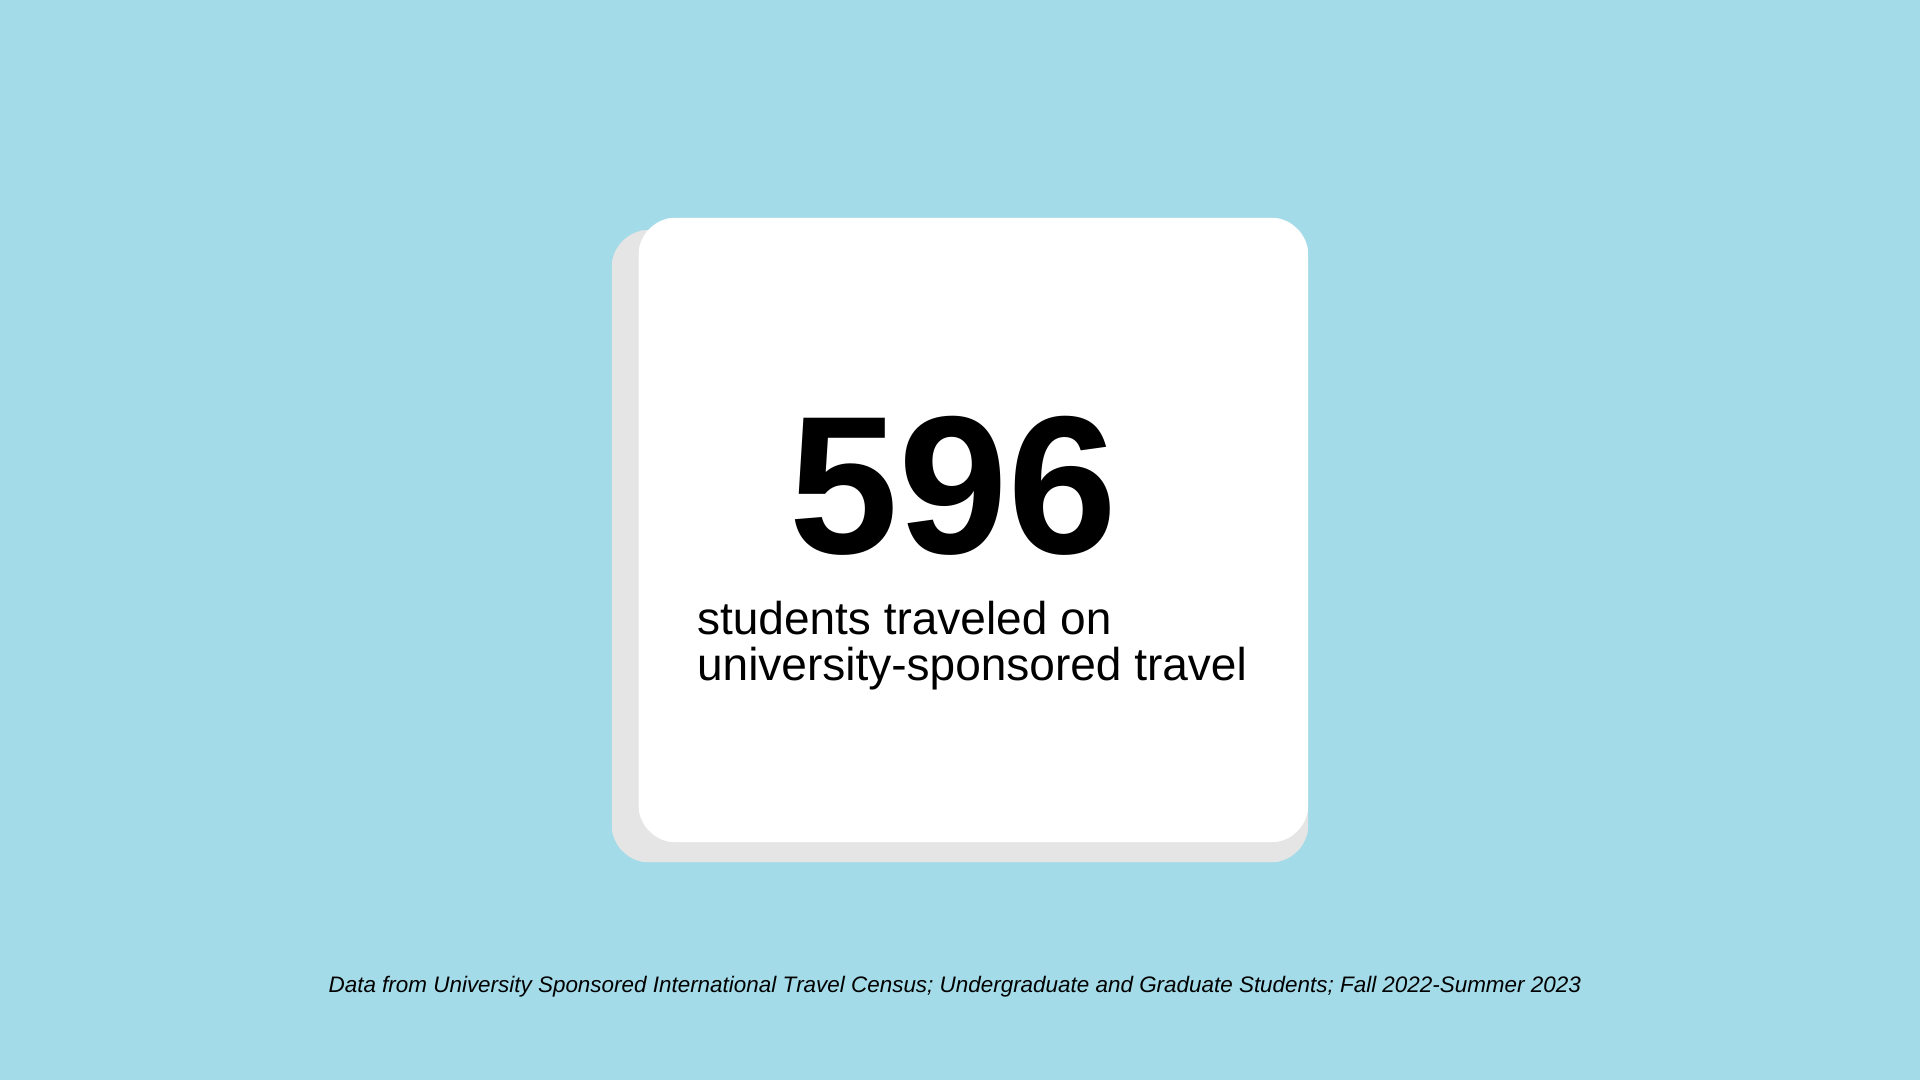 596 students traveled on university-sponsored travel; Data from University Sponsored International Travel Census; Undergraduate and Graduate Students; Fall 2022-Summer 2023